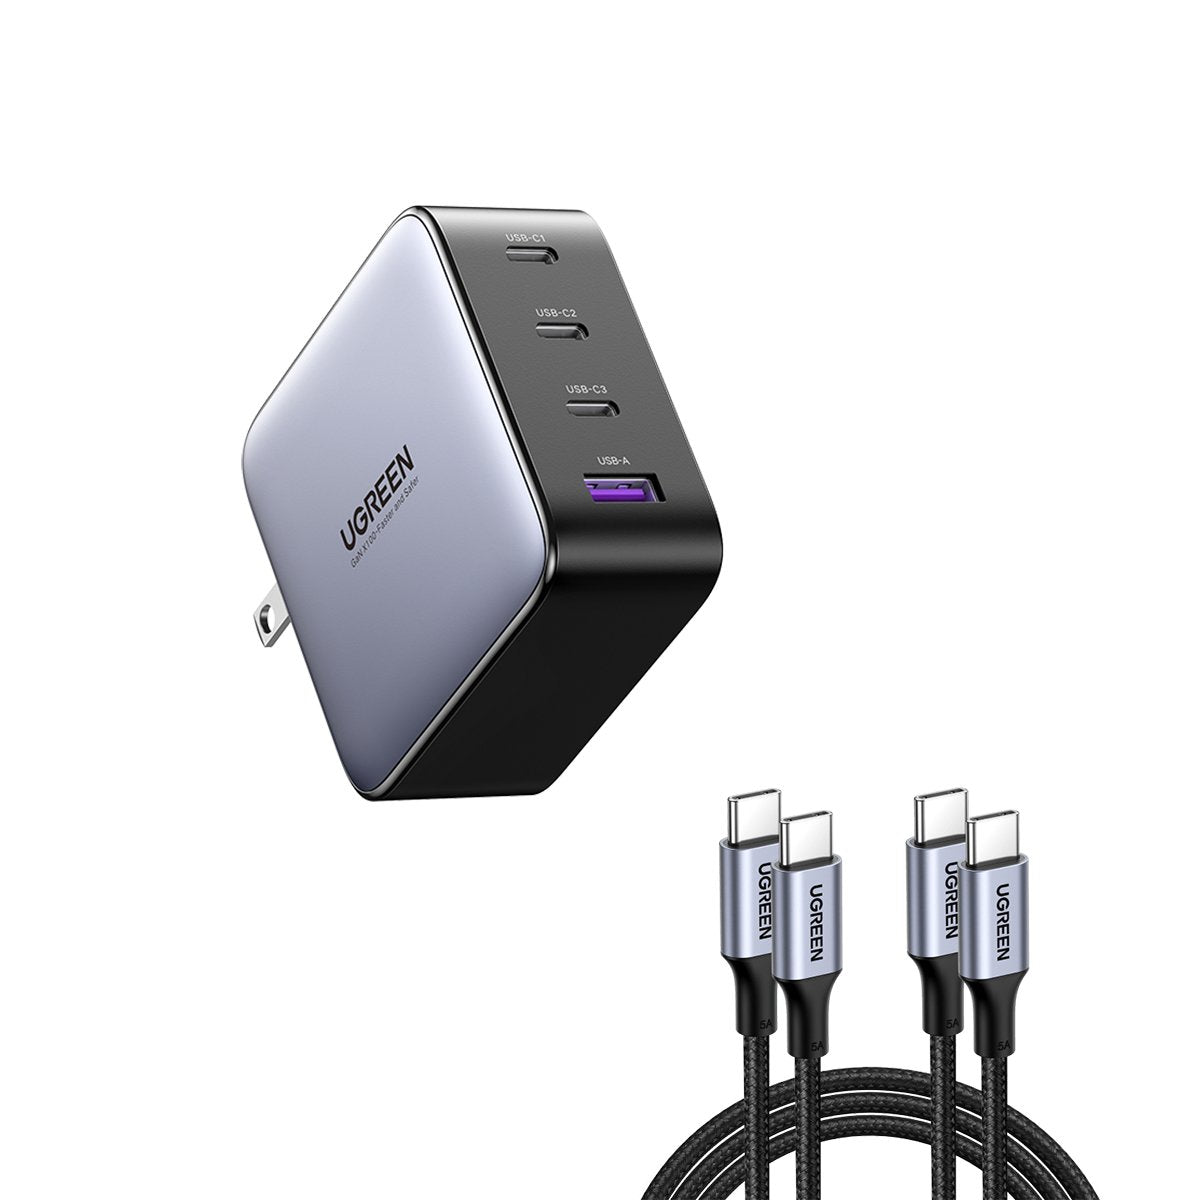 Ugreen Nexode 100W USB C GaN Charger-4 Port Wall Charger – UGREEN